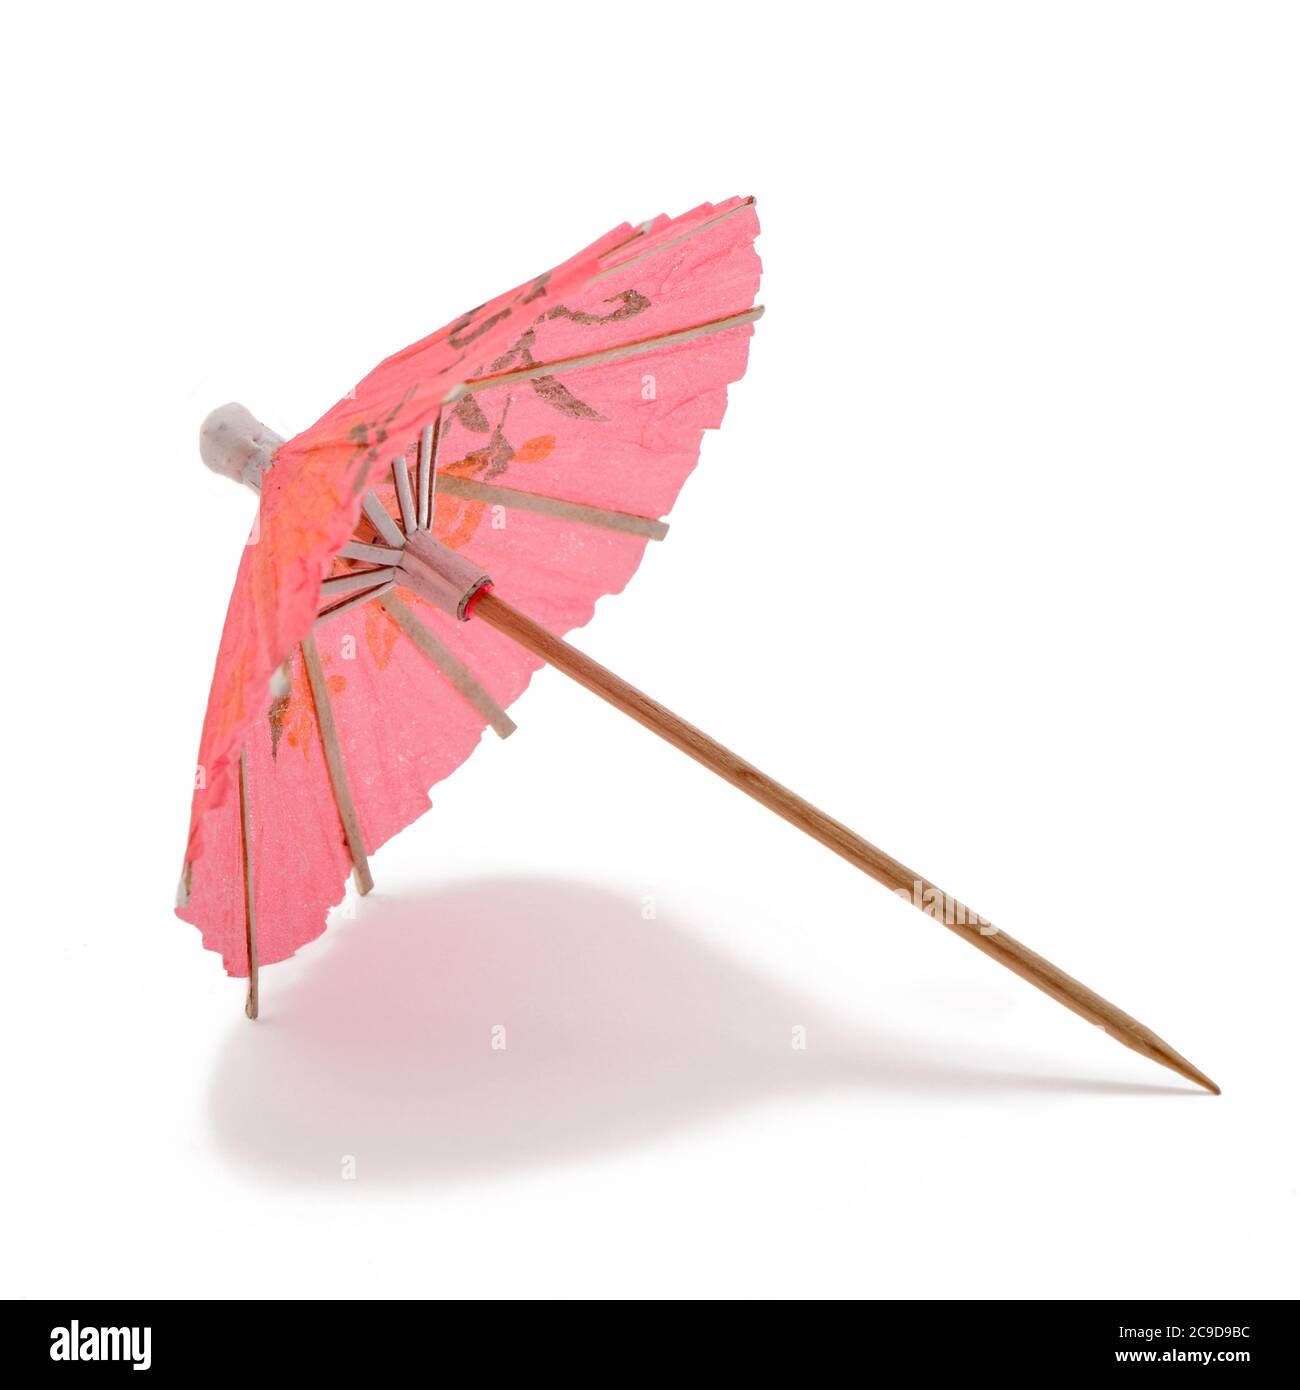 Pink paper umbrella isolated on white background Stock Photo - Alamy